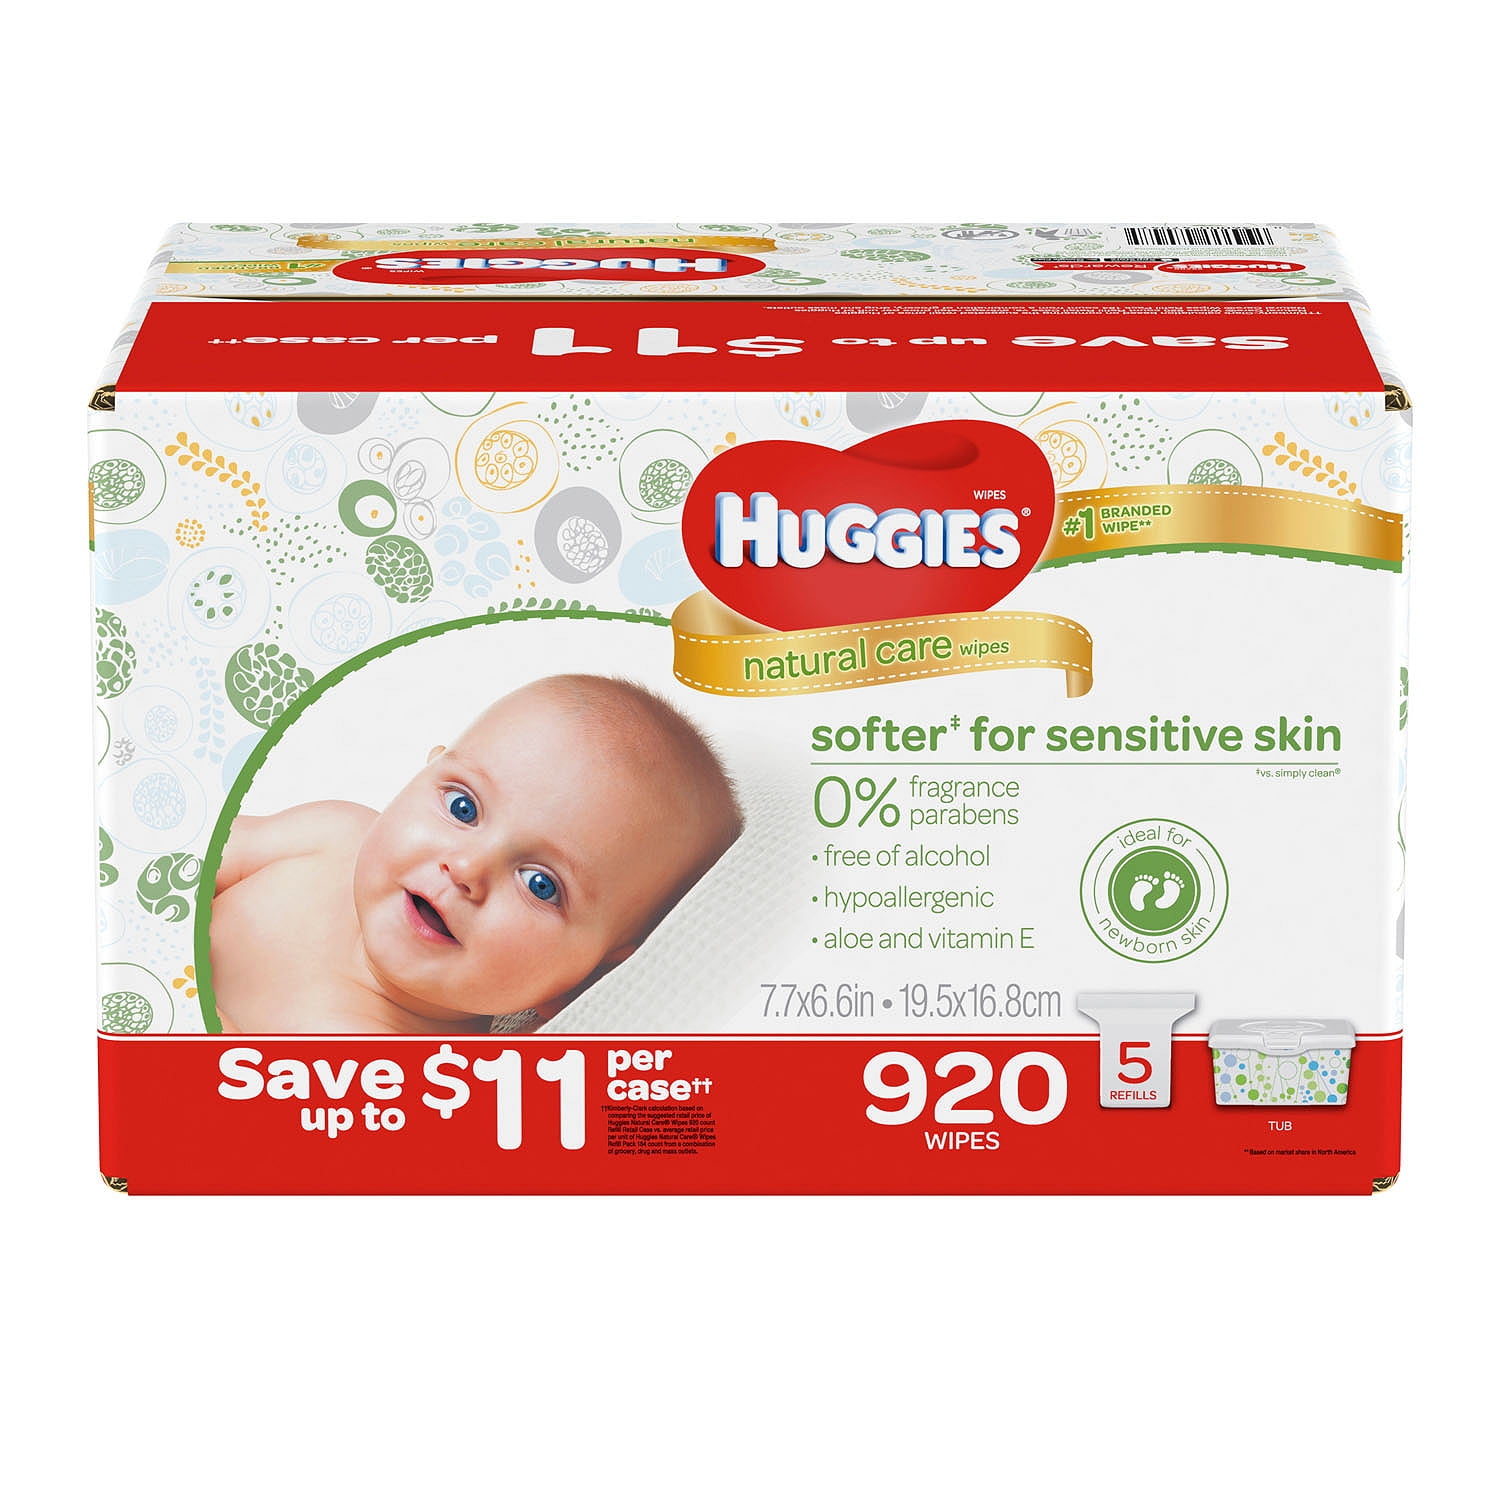 Pack of 72 Huggies Pure Baby Wipes